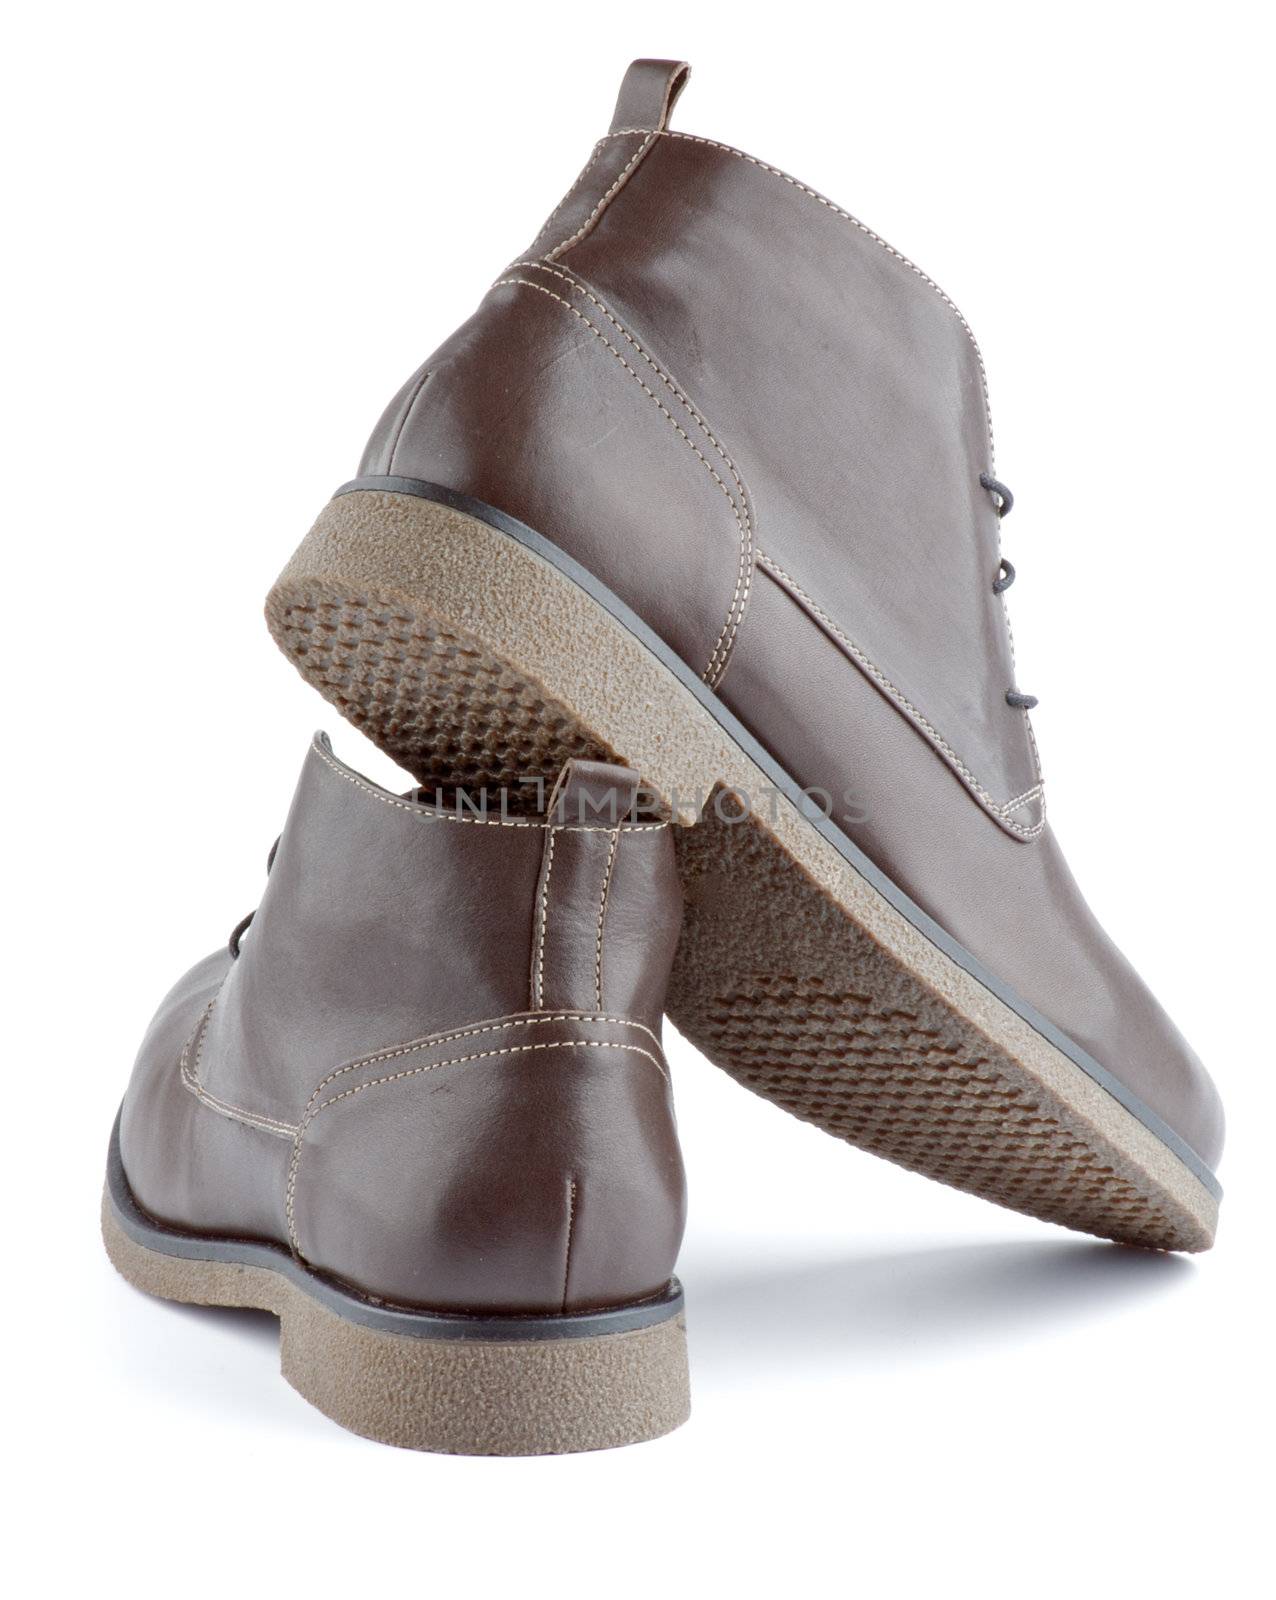 Brown man's shoes  by zhekos